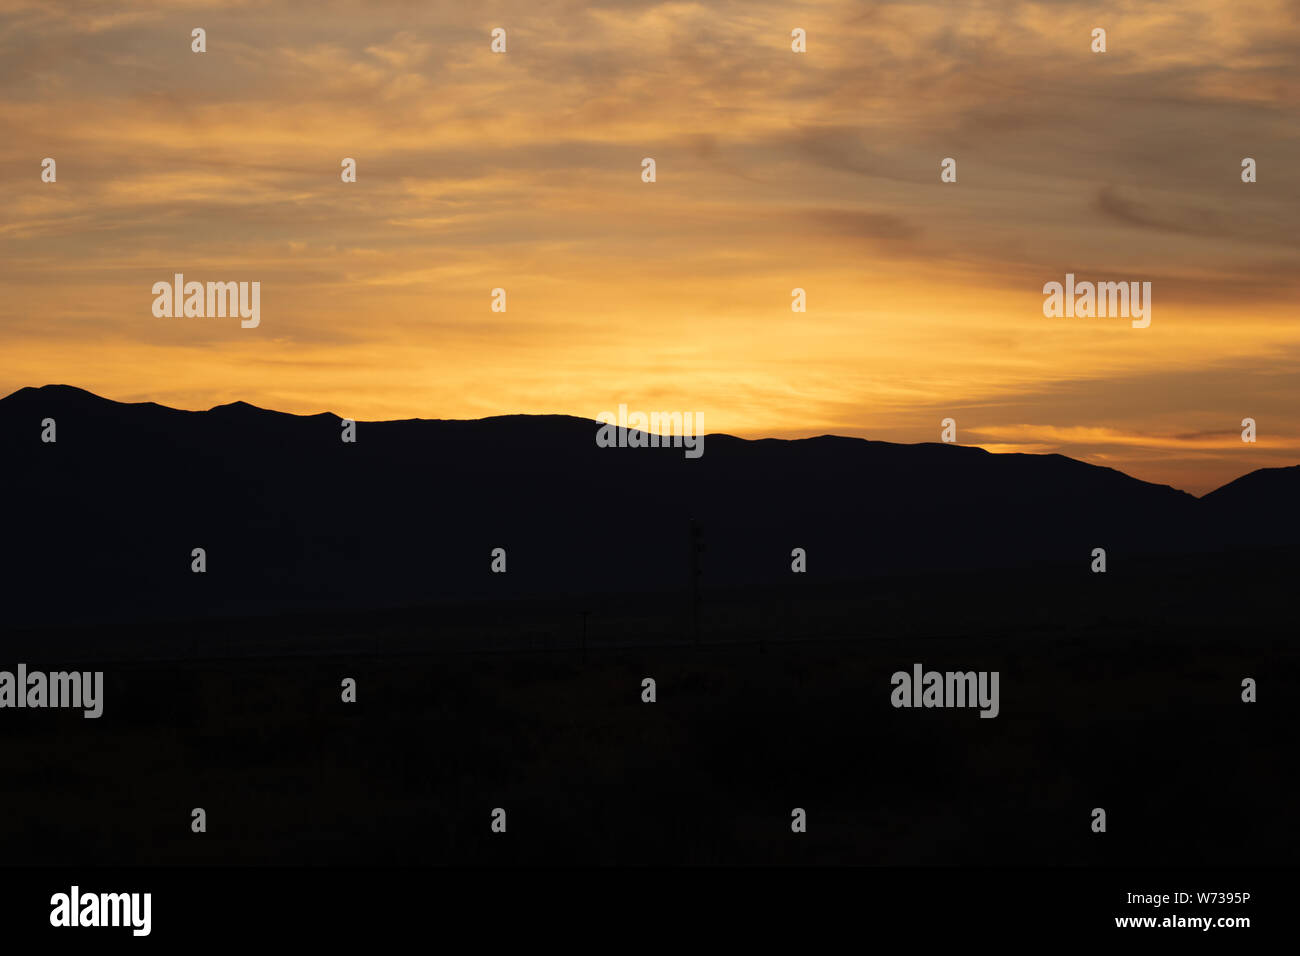 Bright orange sunrise above the silhouette of a mountain in the California desert Stock Photo